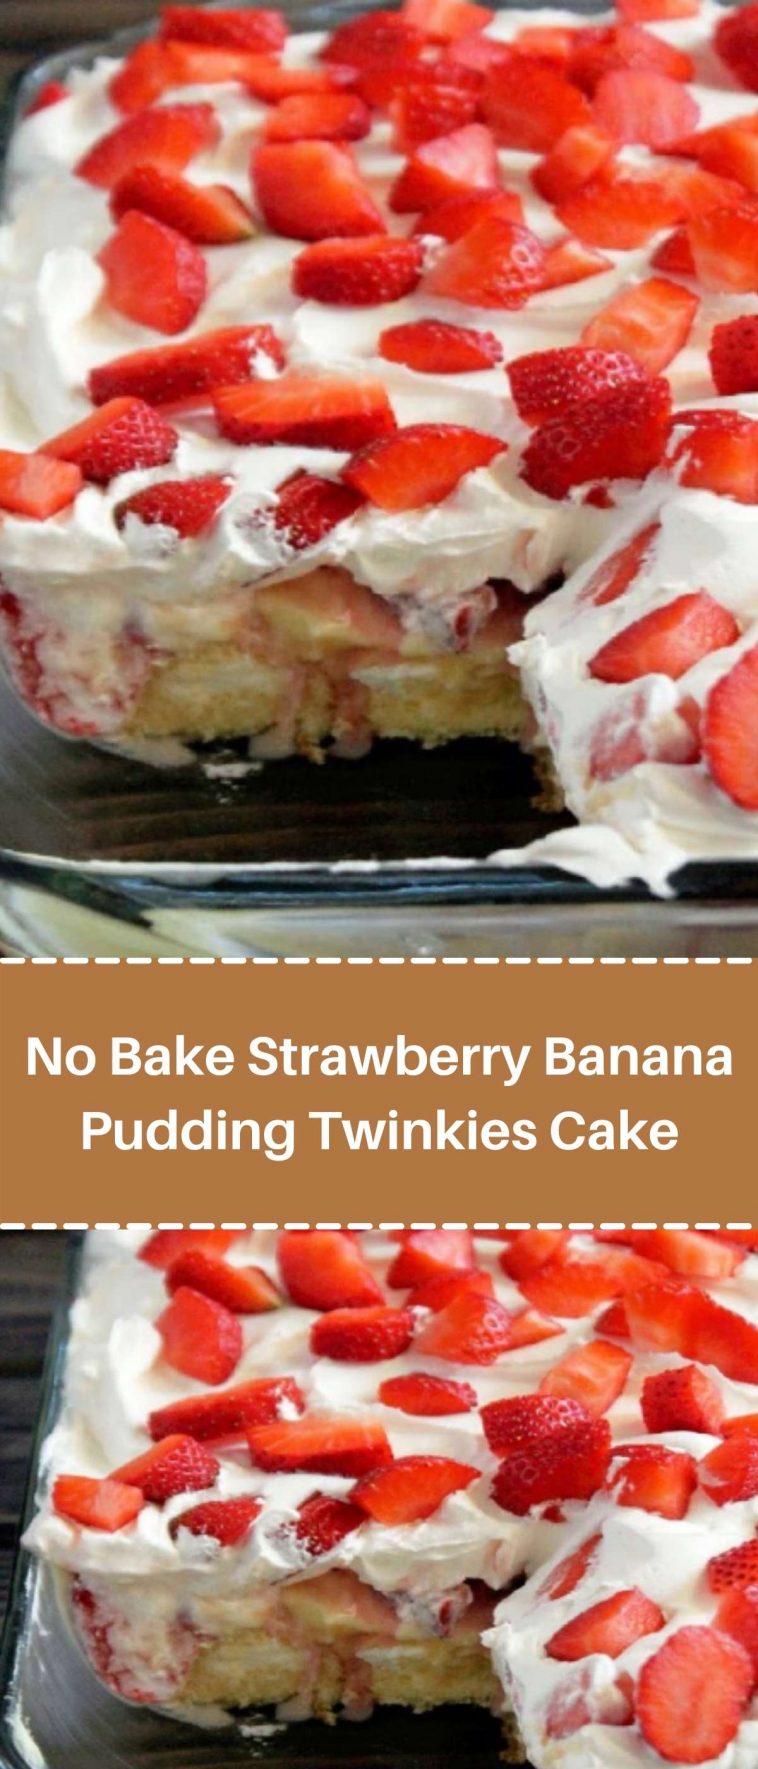 No Bake Strawberry Banana Pudding Twinkies Cake